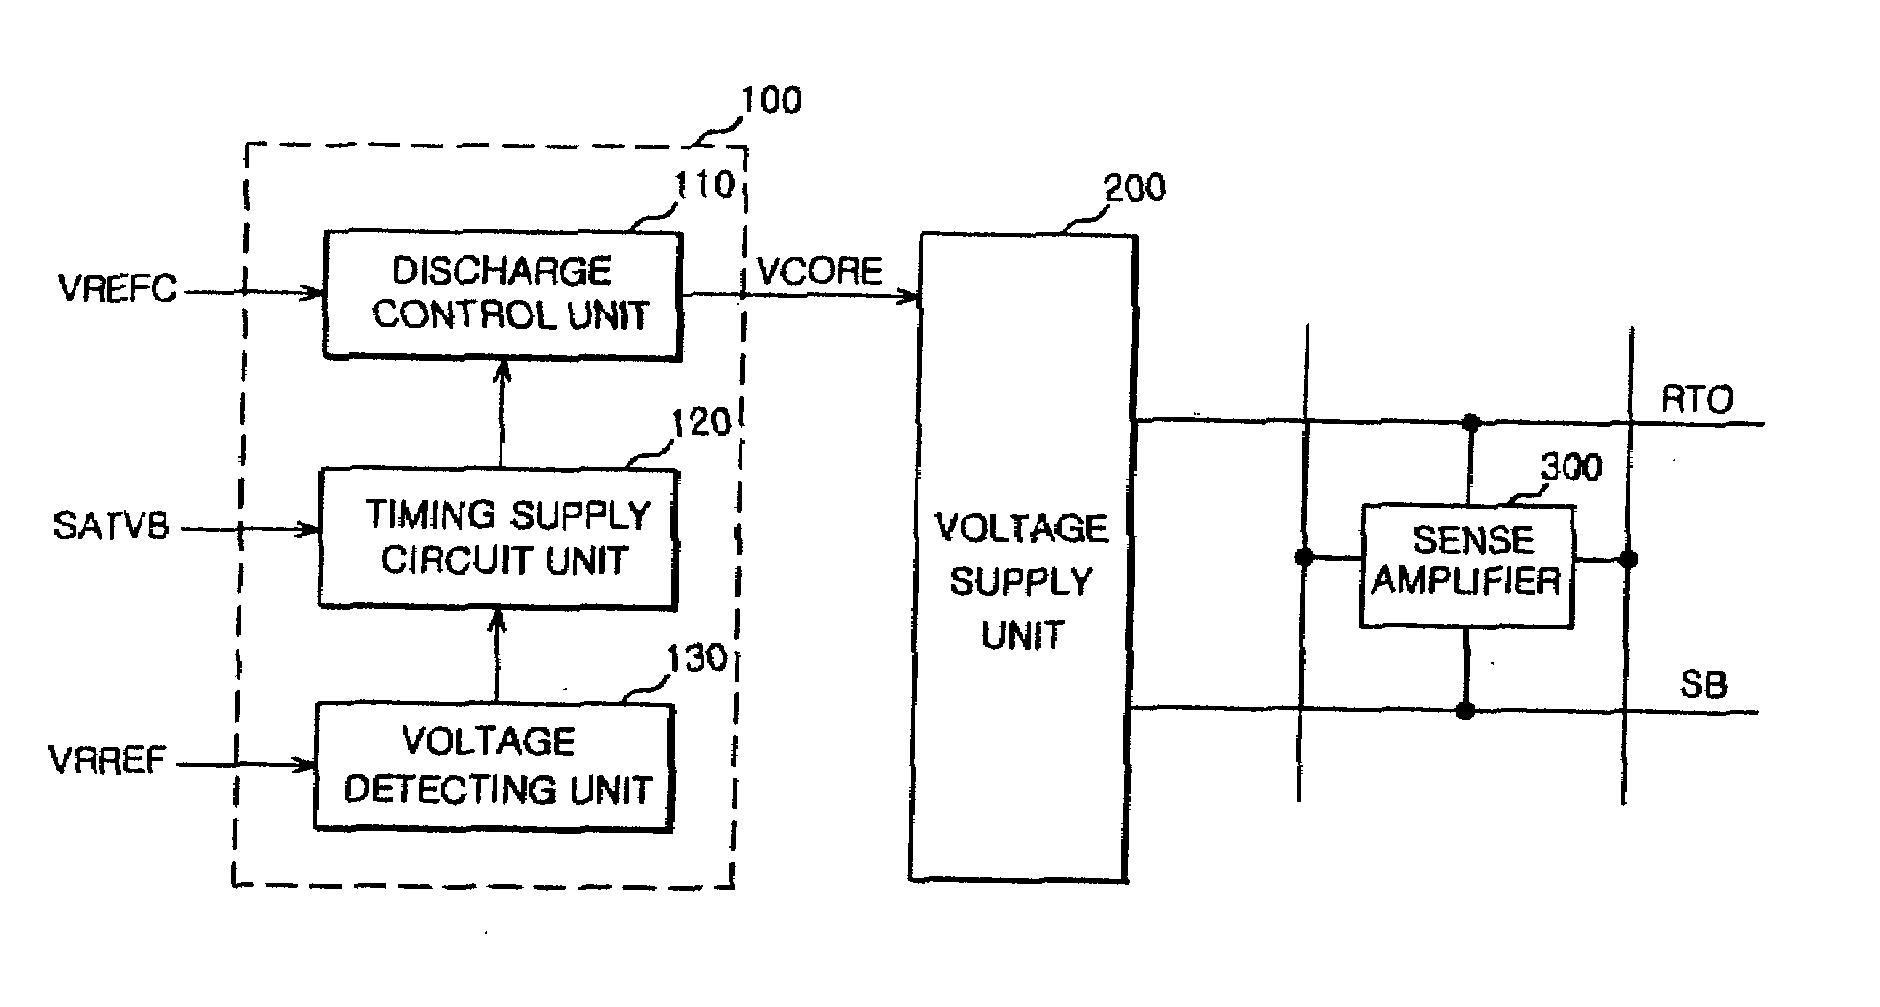 Semiconductor memory apparatus